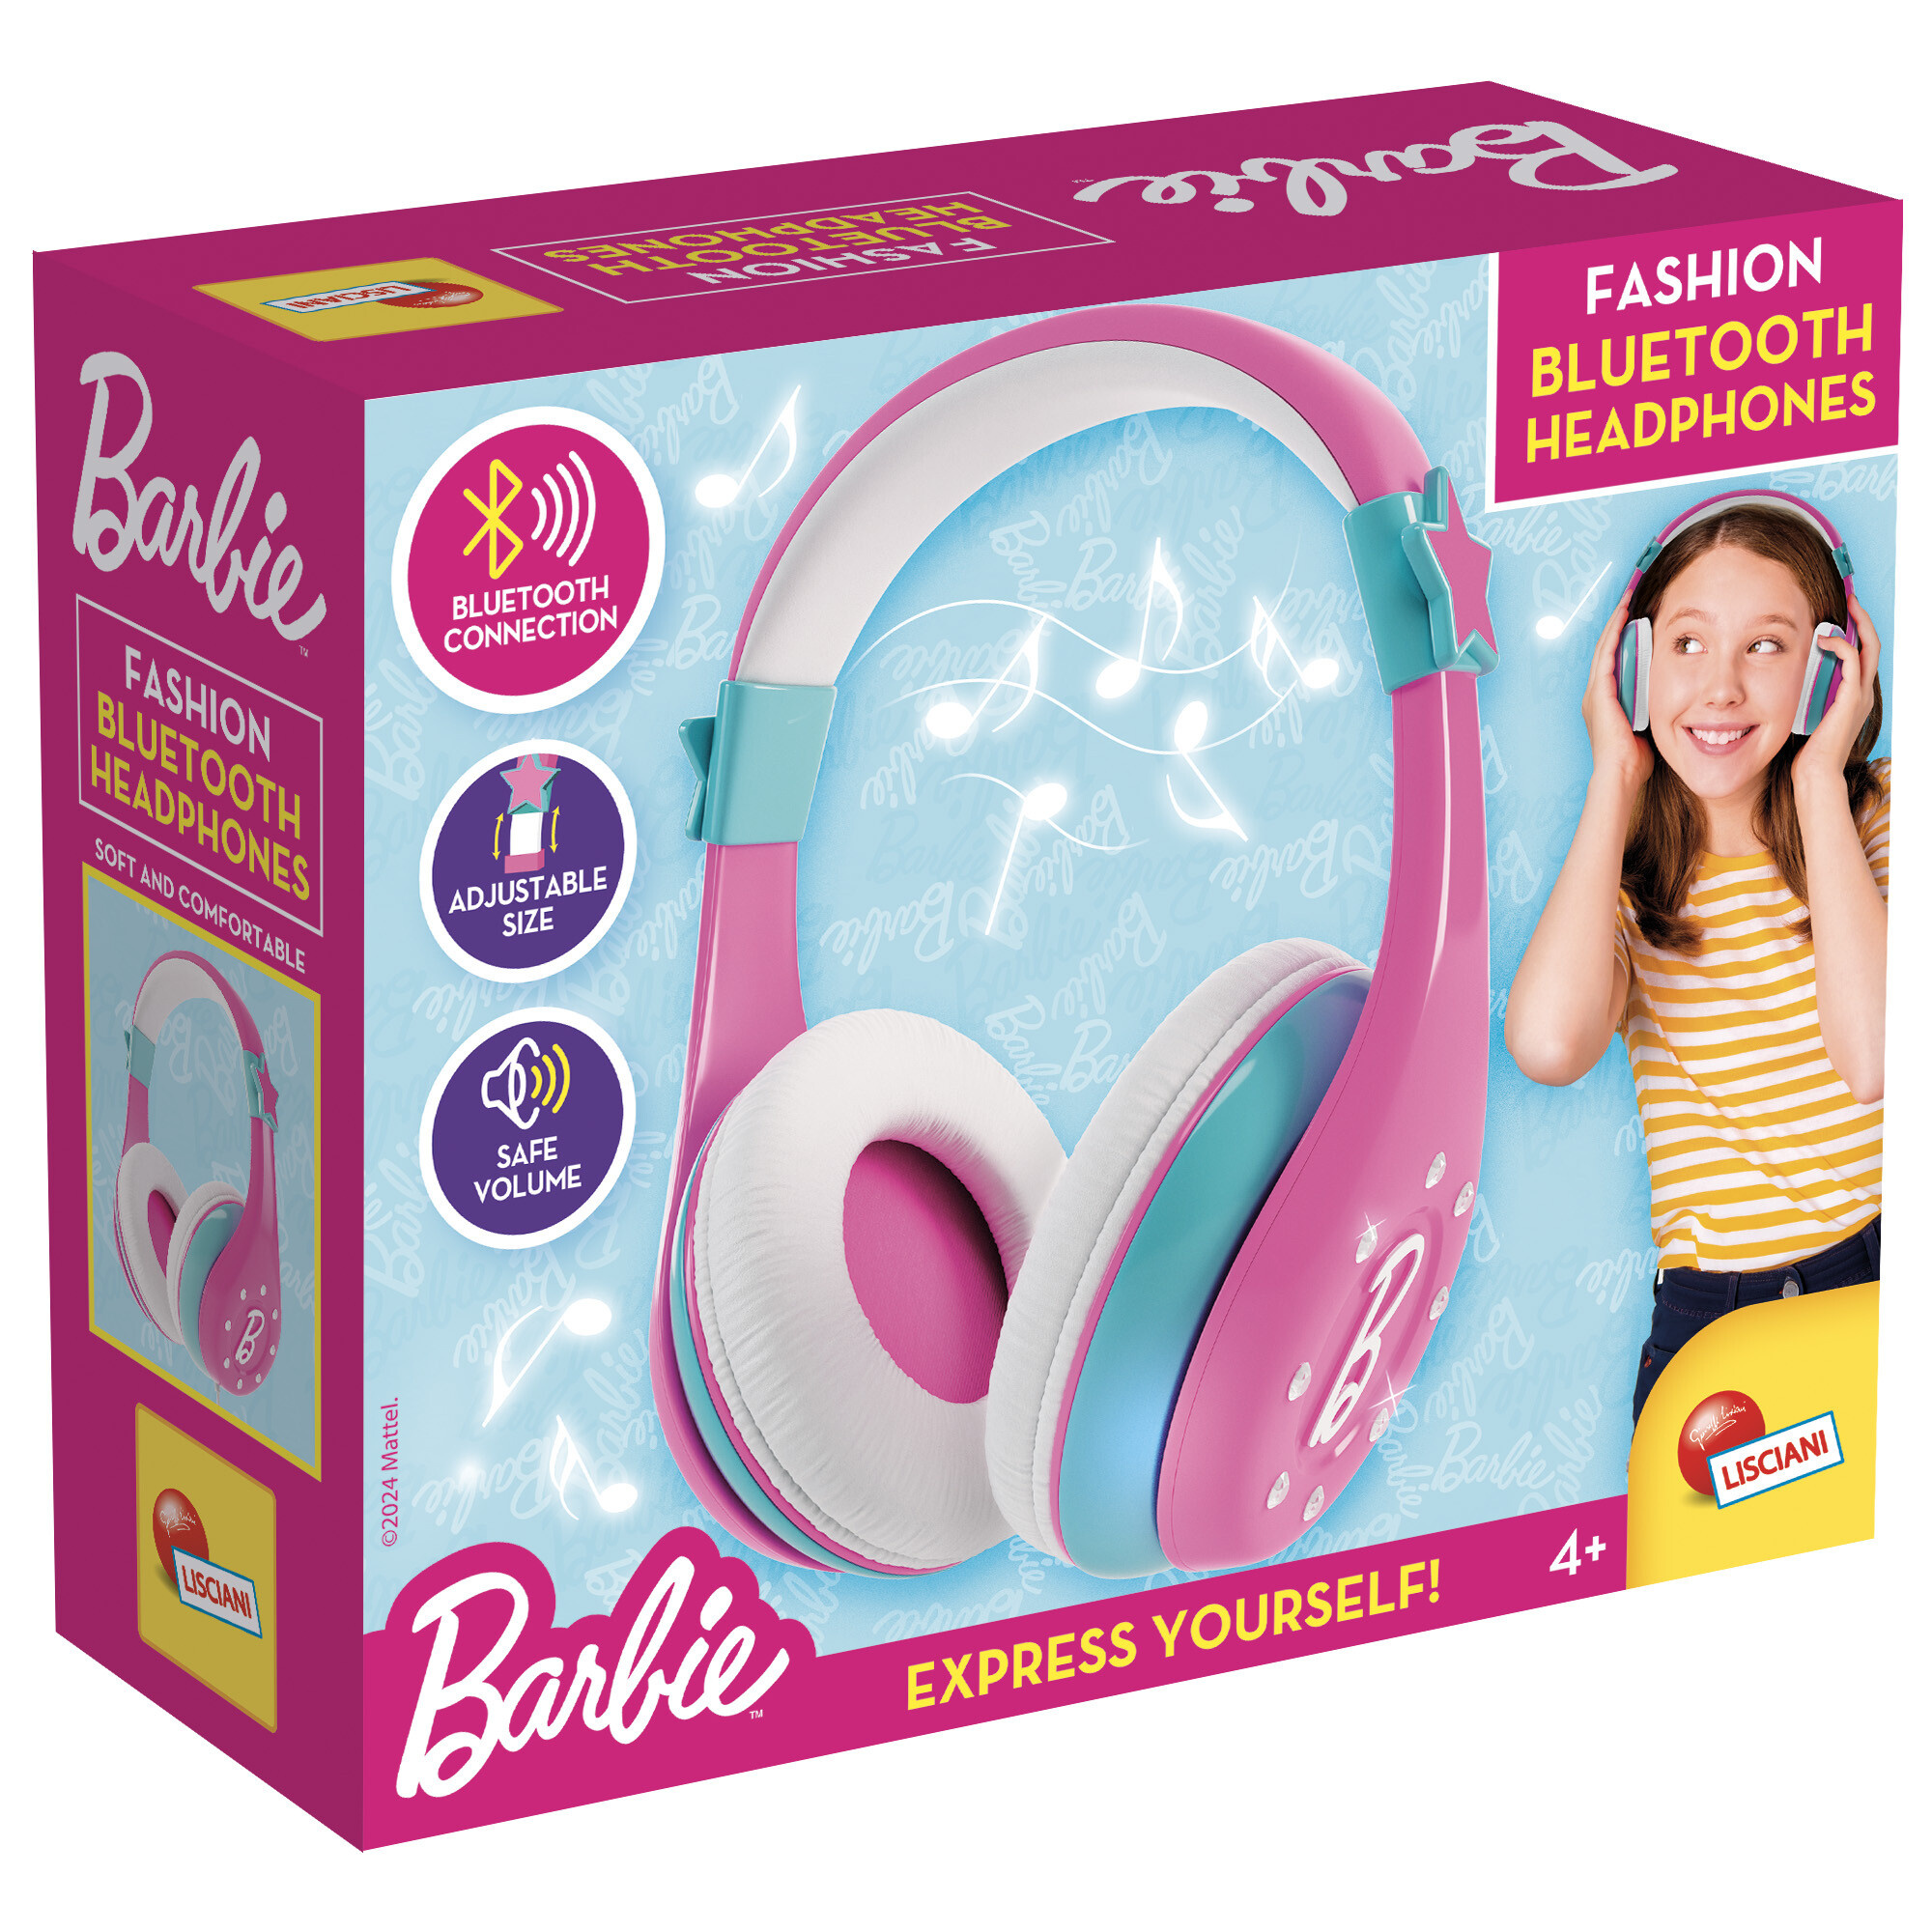 Barbie fashion bluetooth headphones - LISCIANI, Barbie